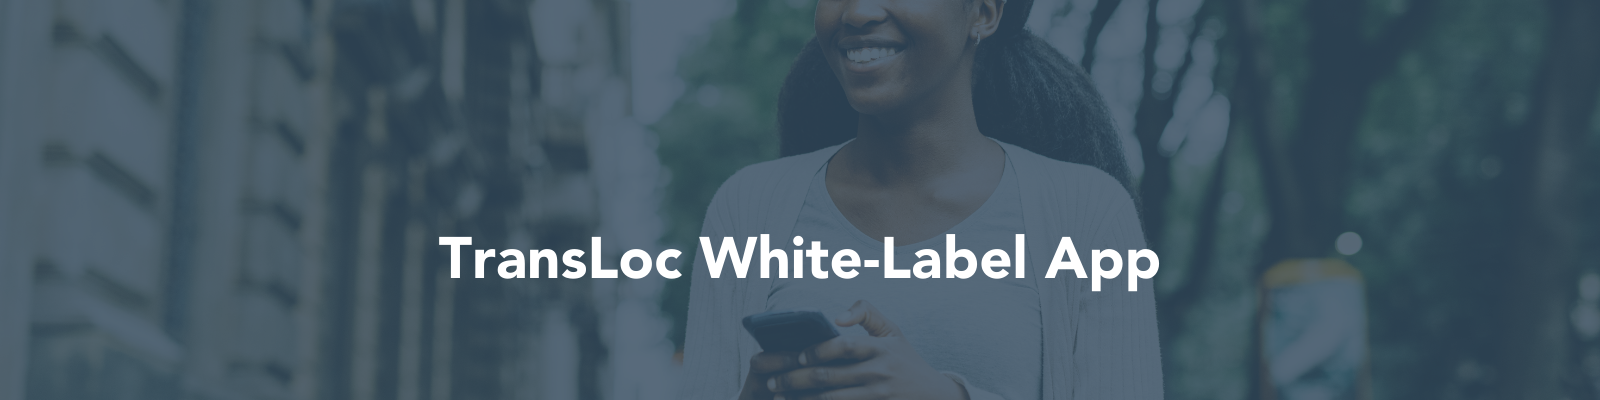 TransLoc White Label App - LP Banner